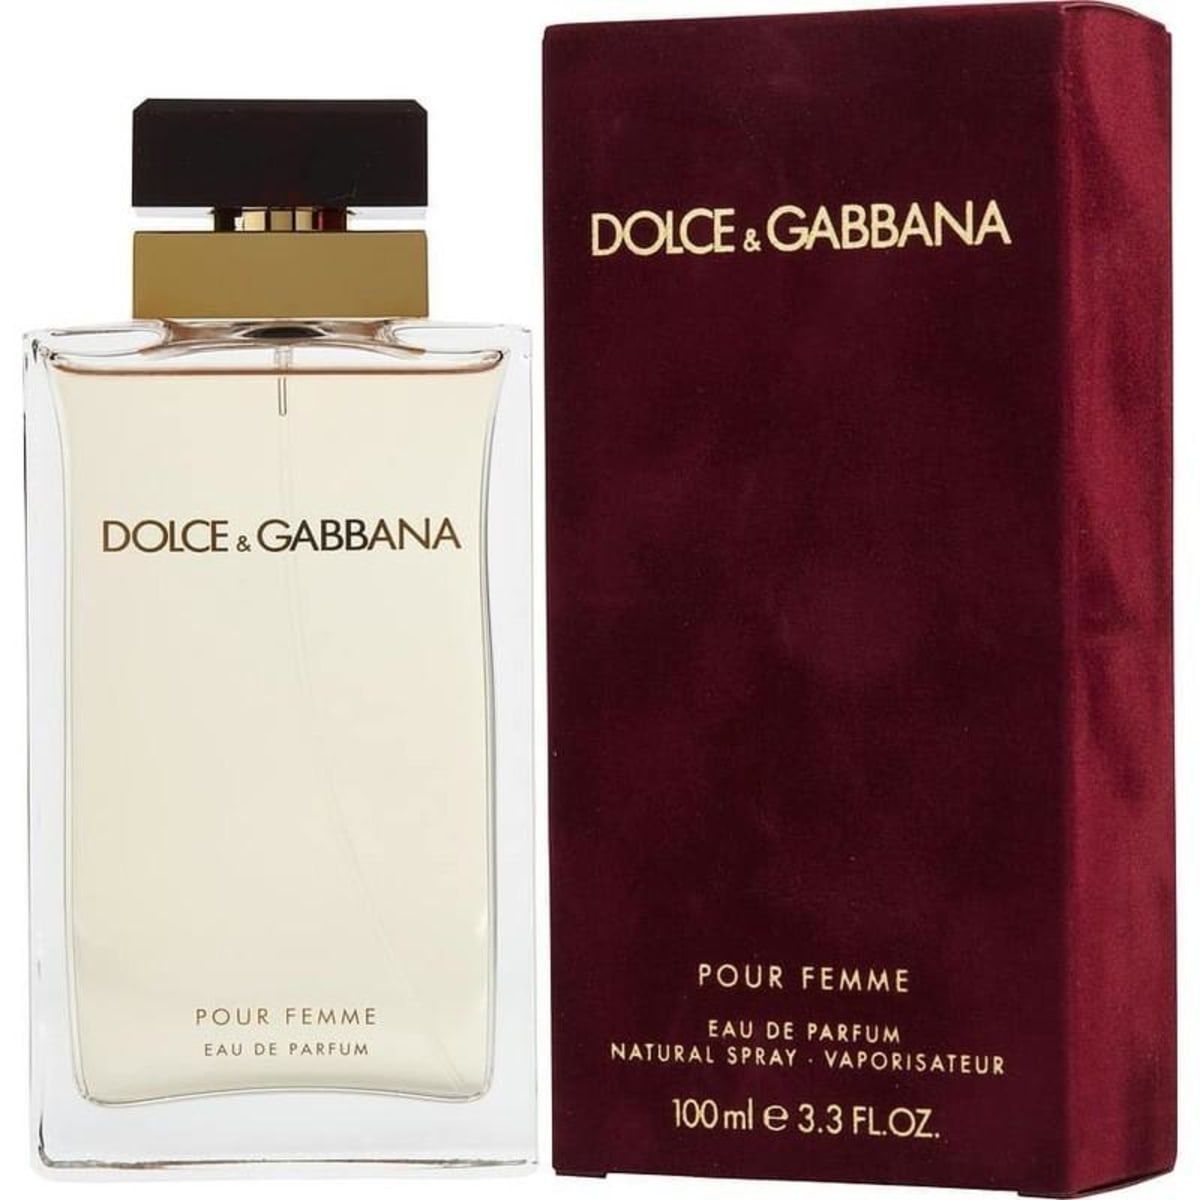 Dolce & Gabbana Pour Femme 3.3 oz EDP Spray